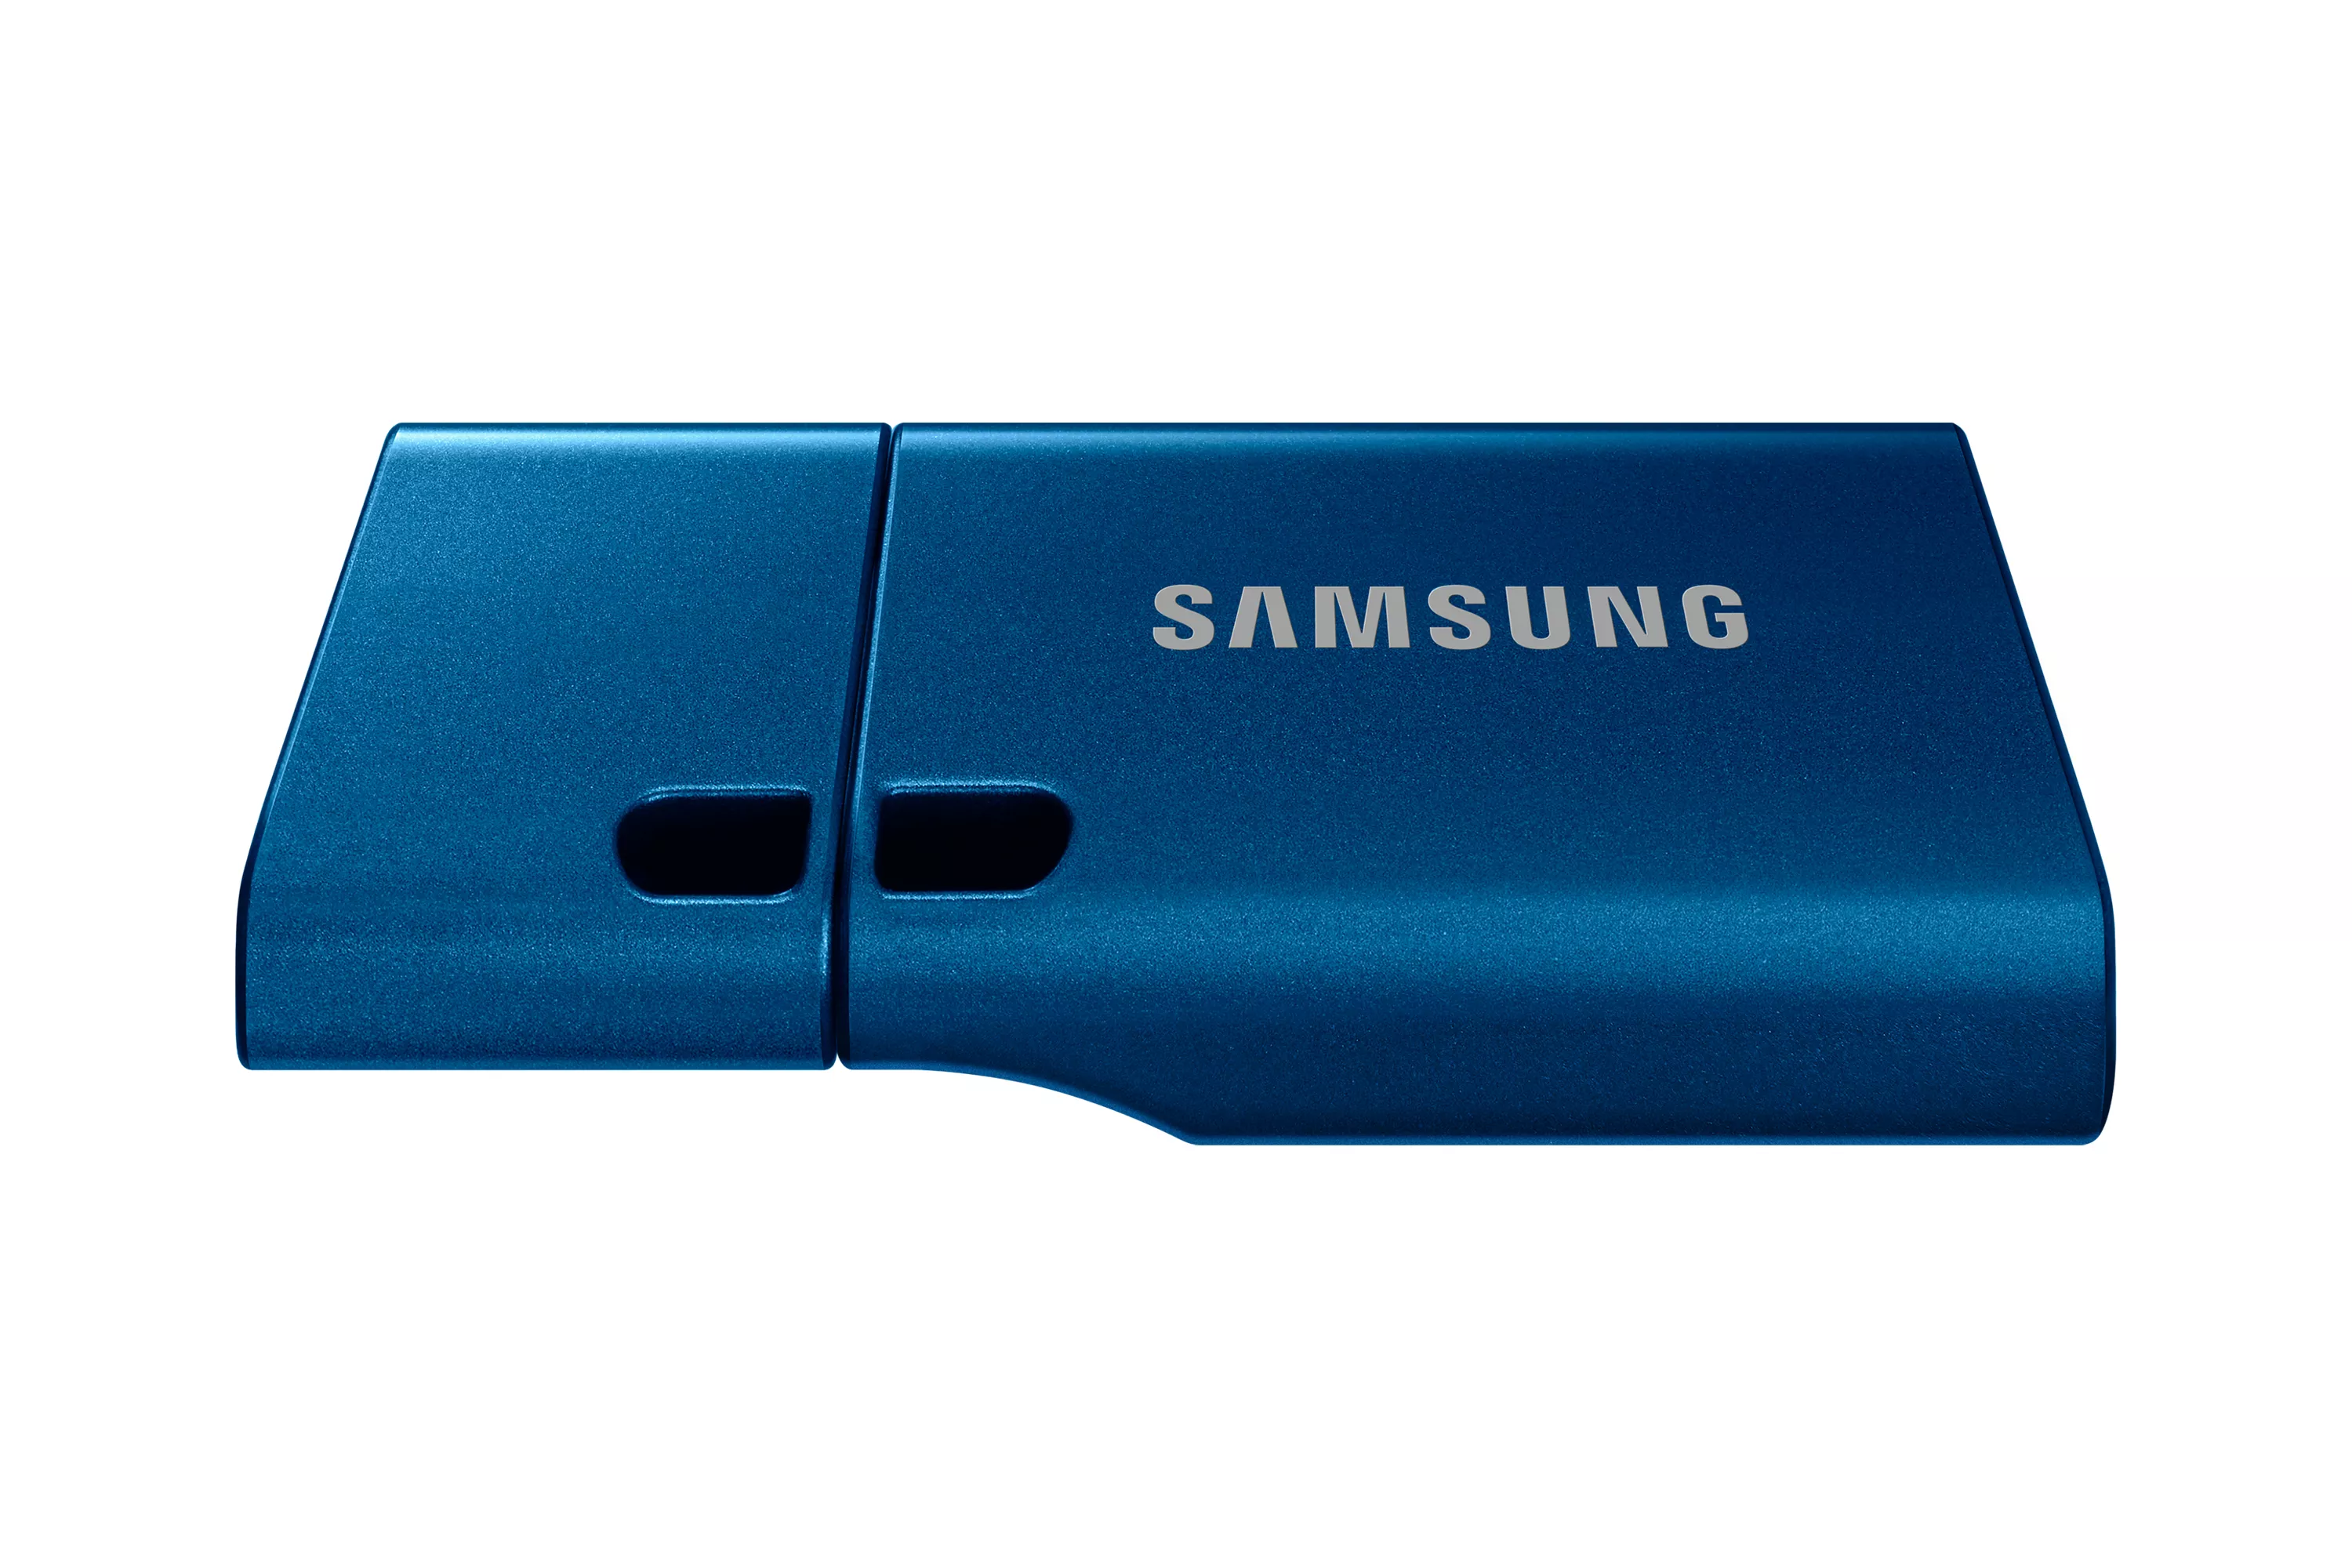 Vente SAMSUNG USB Type-C 128Go 400Mo/s USB 3.1 Flash Samsung au meilleur prix - visuel 8